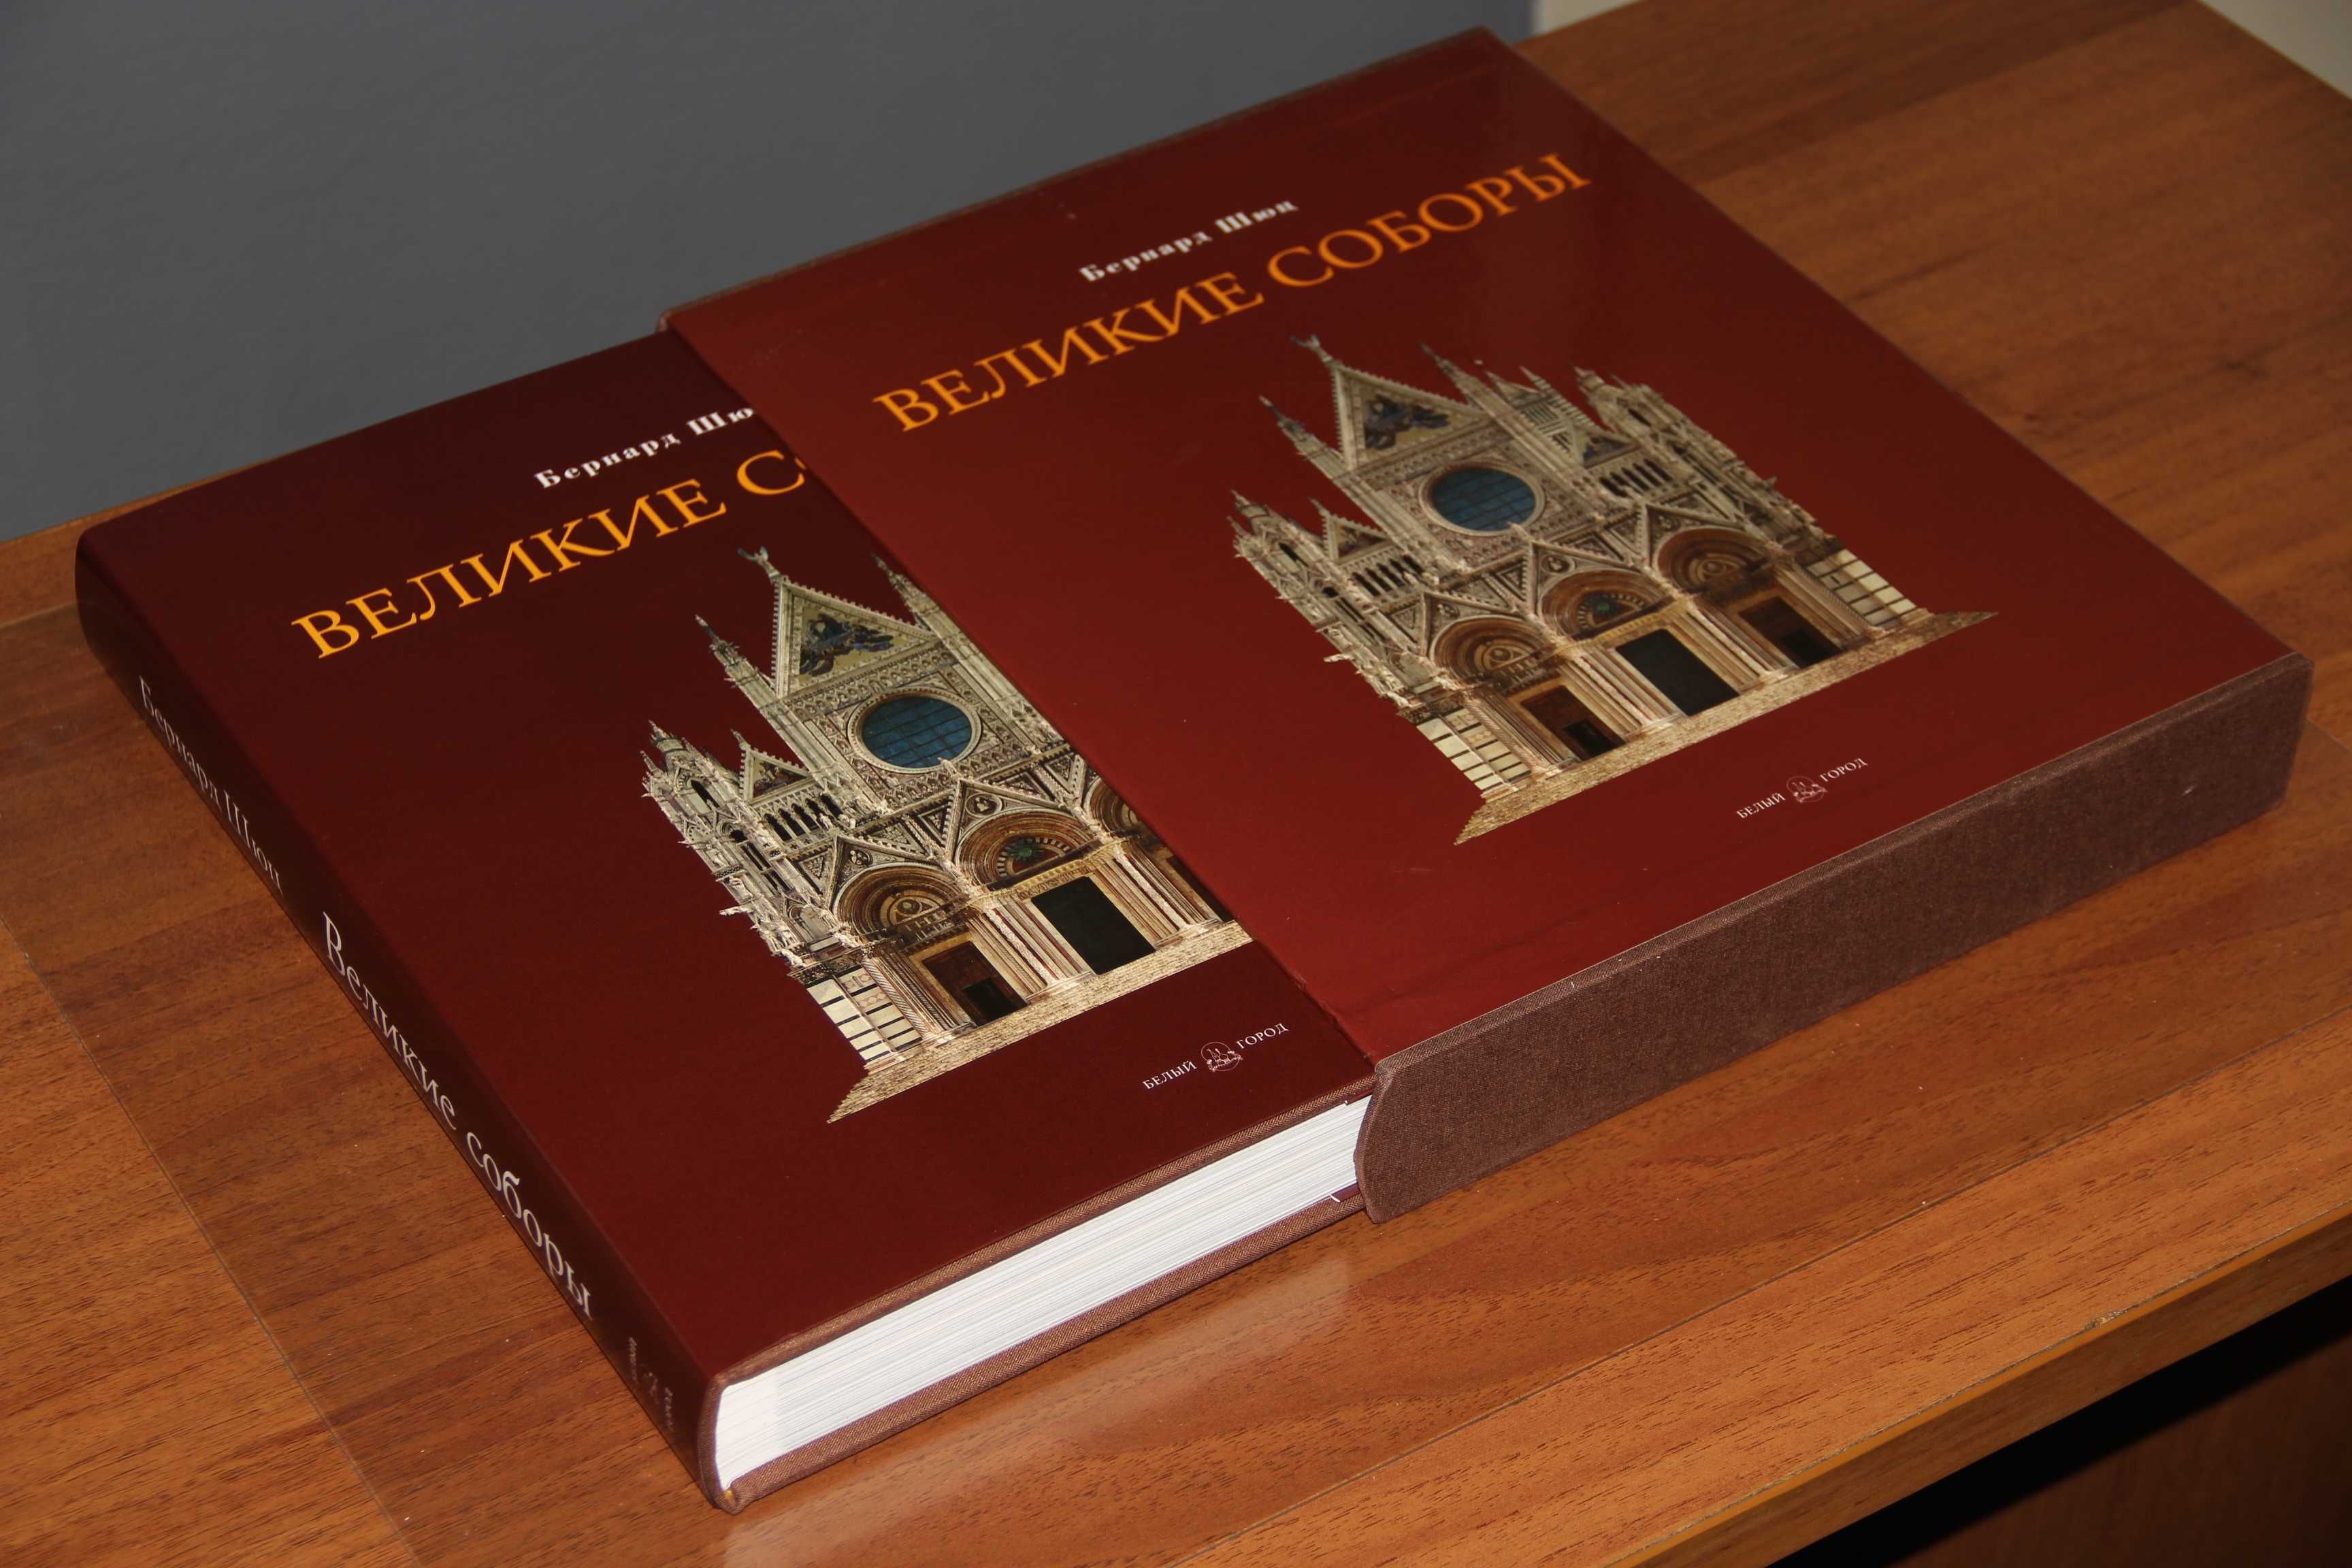 Бернард Шюц: Великие соборы / Белый город 2003 футл ISBN 5-7793-0632-X